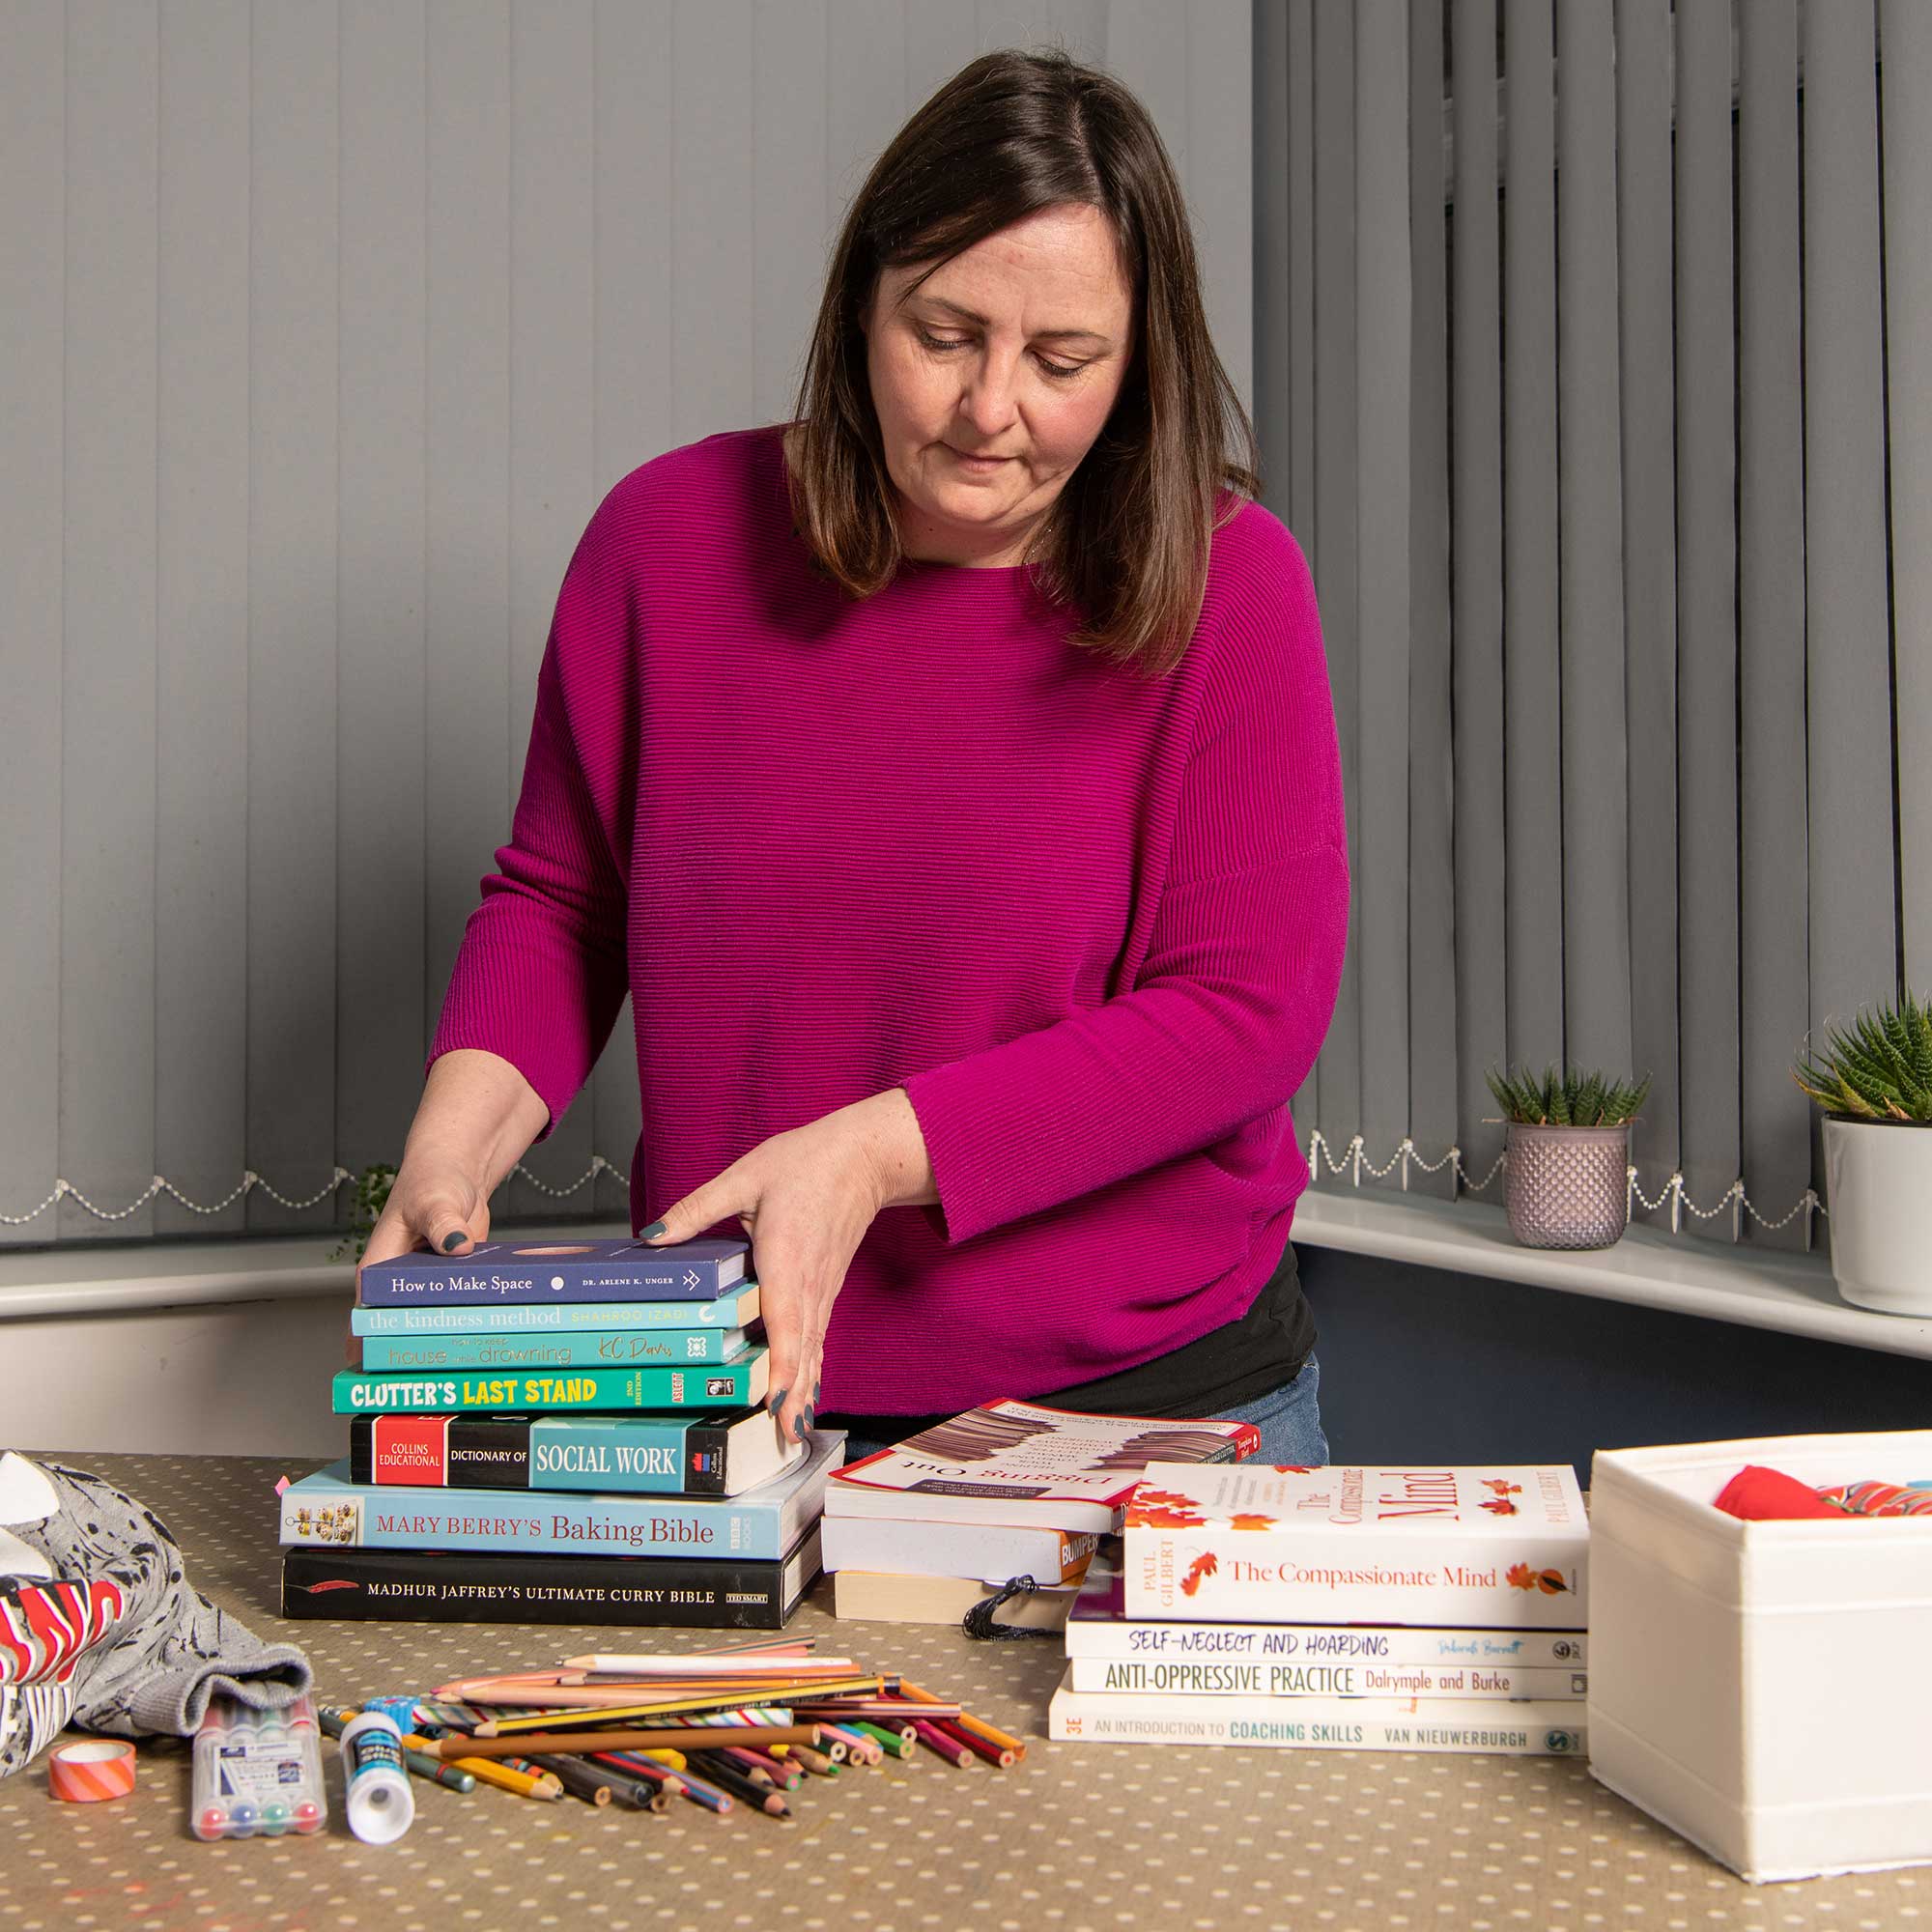 Lisa barrett profesional organiser decluttering a pile of books